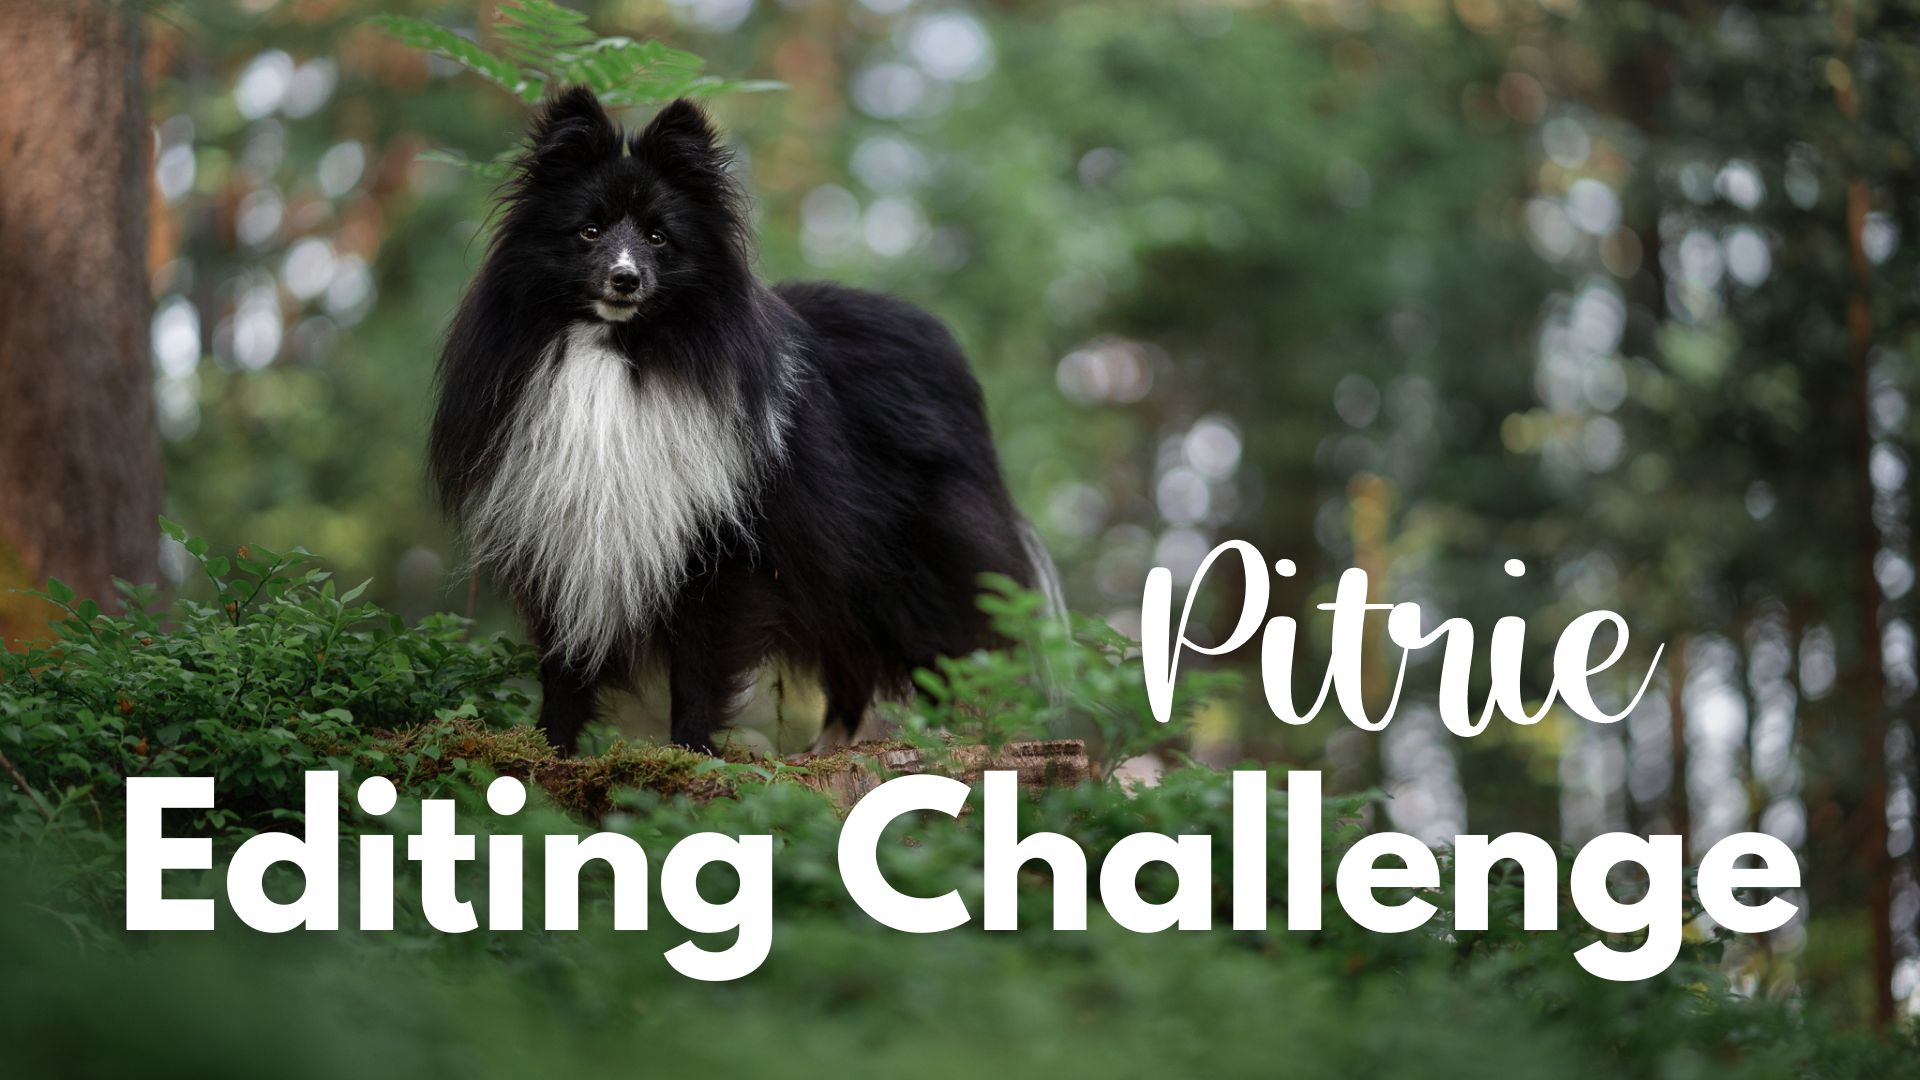 Beginning Editing Challenge: Pitrie